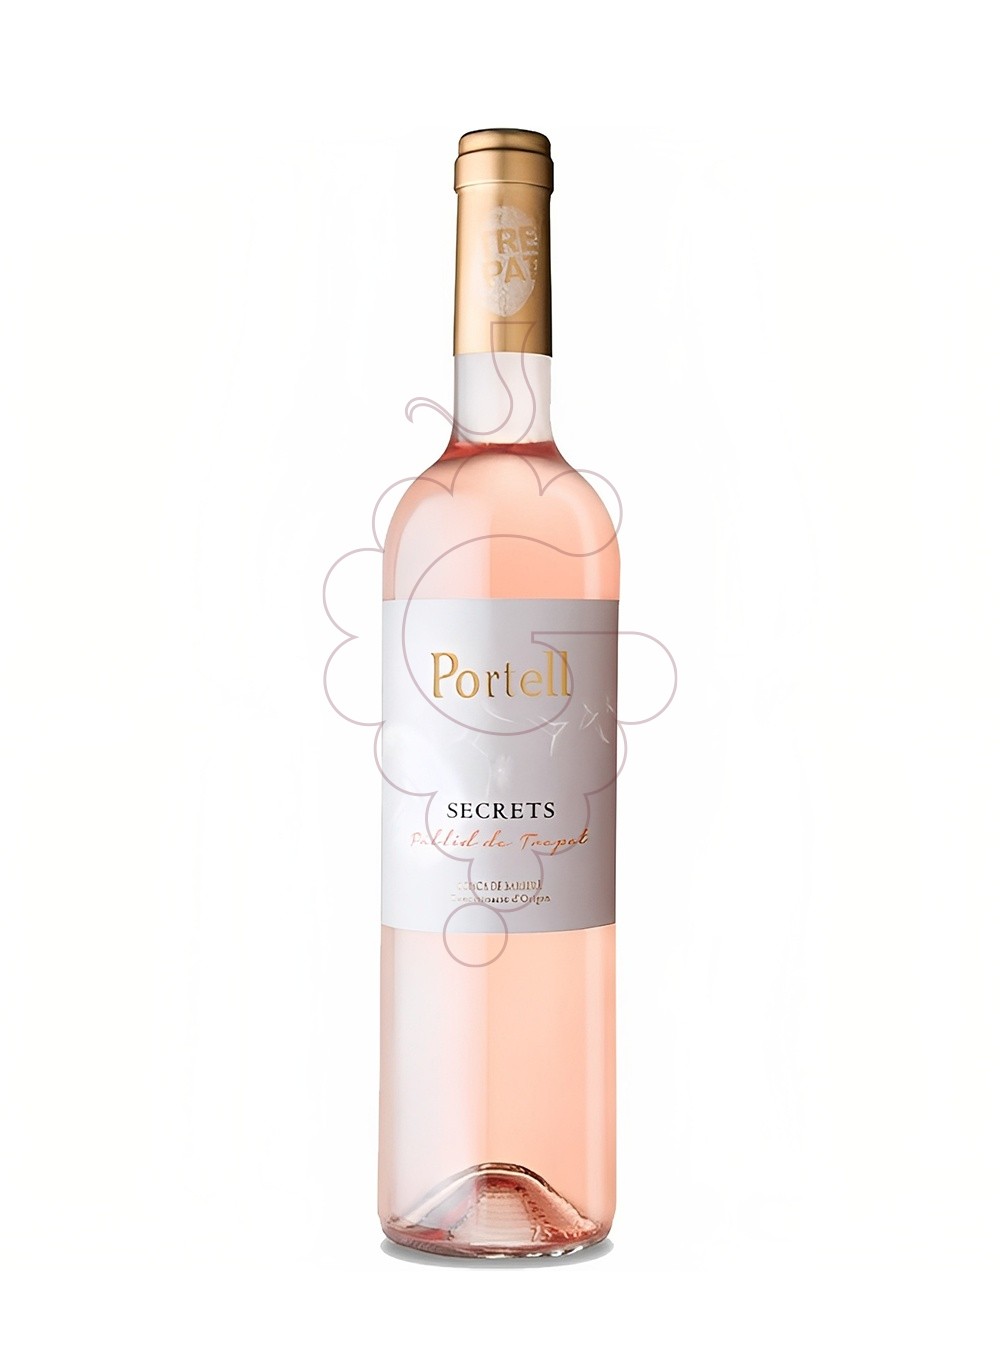 Photo Portell Secrets rosé wine